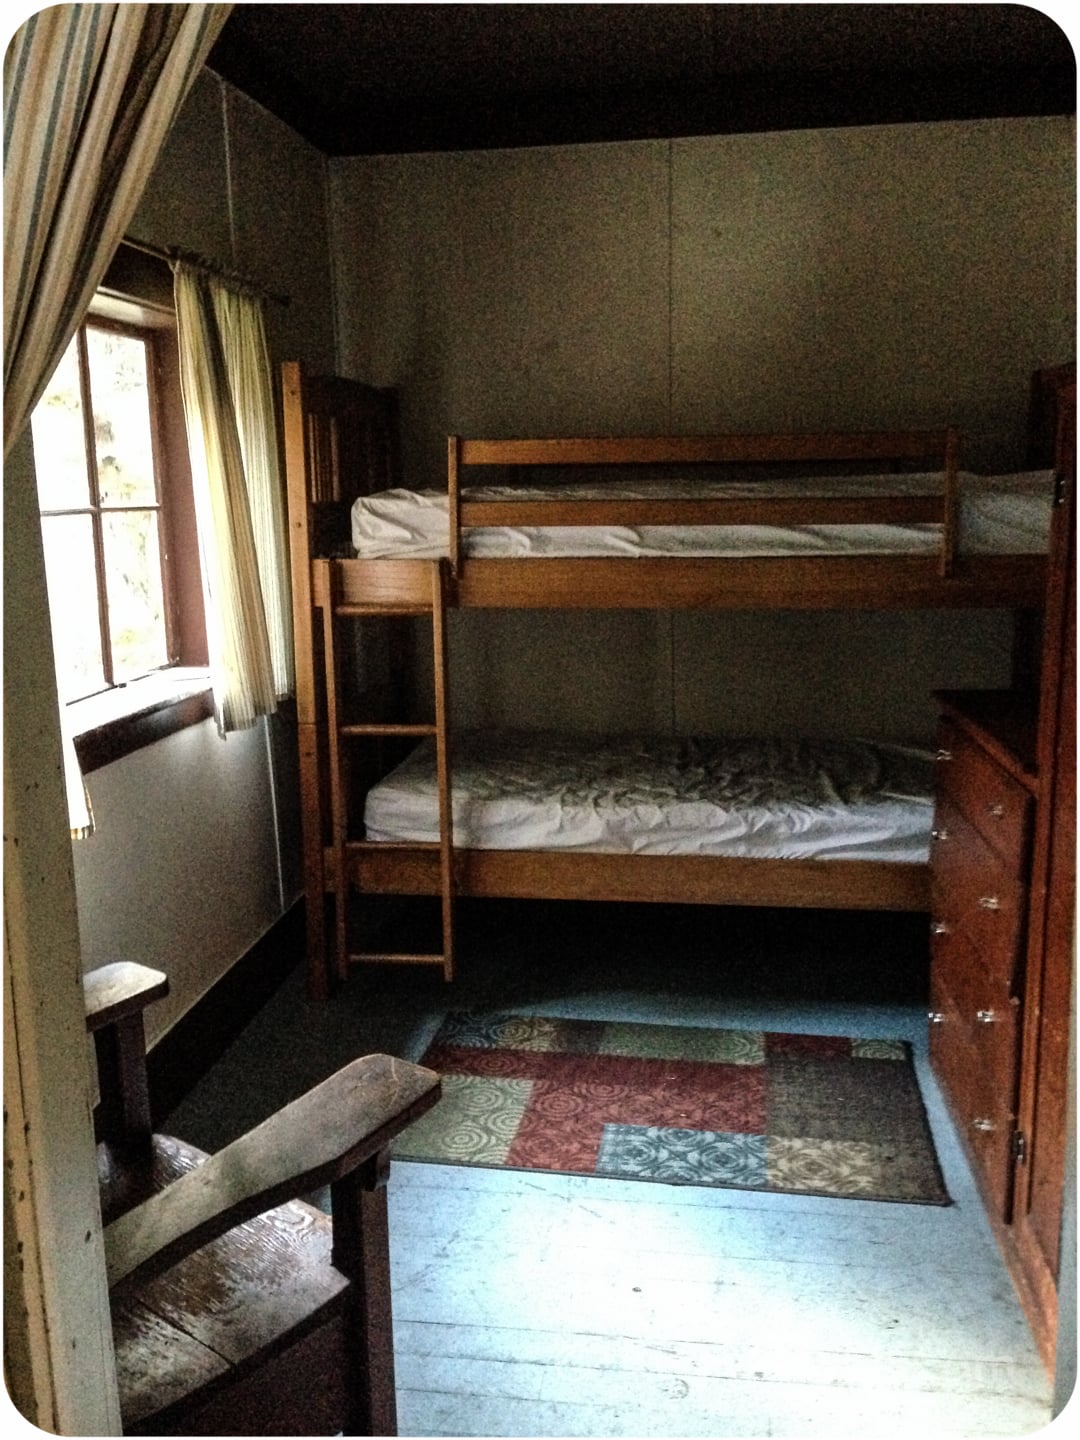 park ranger sleeping quarters with bunks